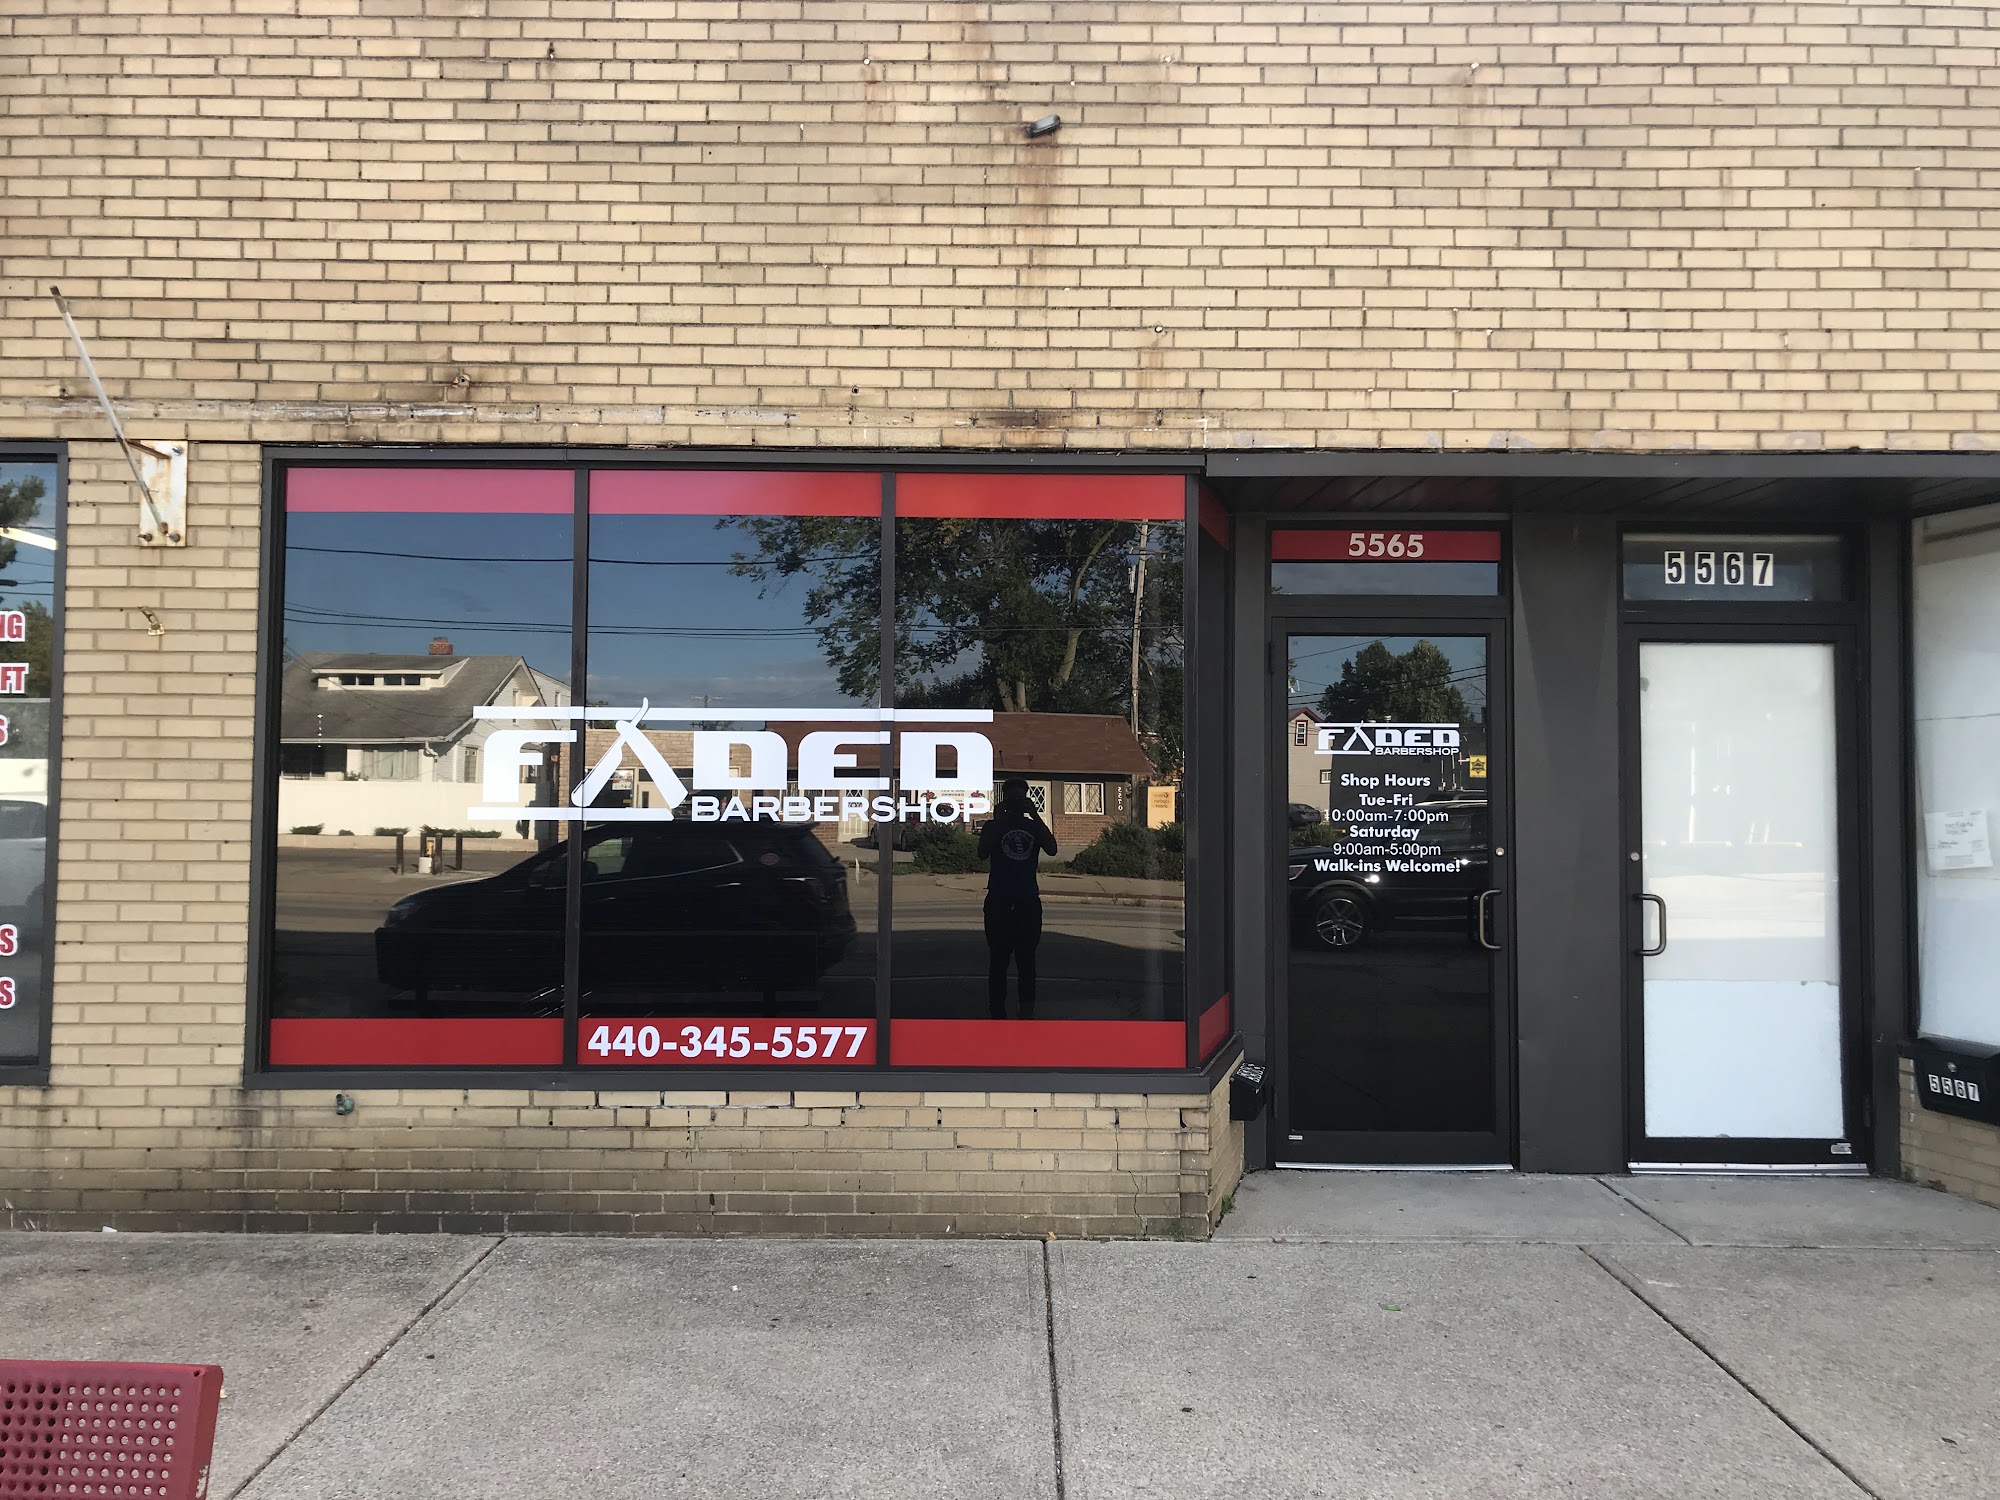 Faded Barbershop